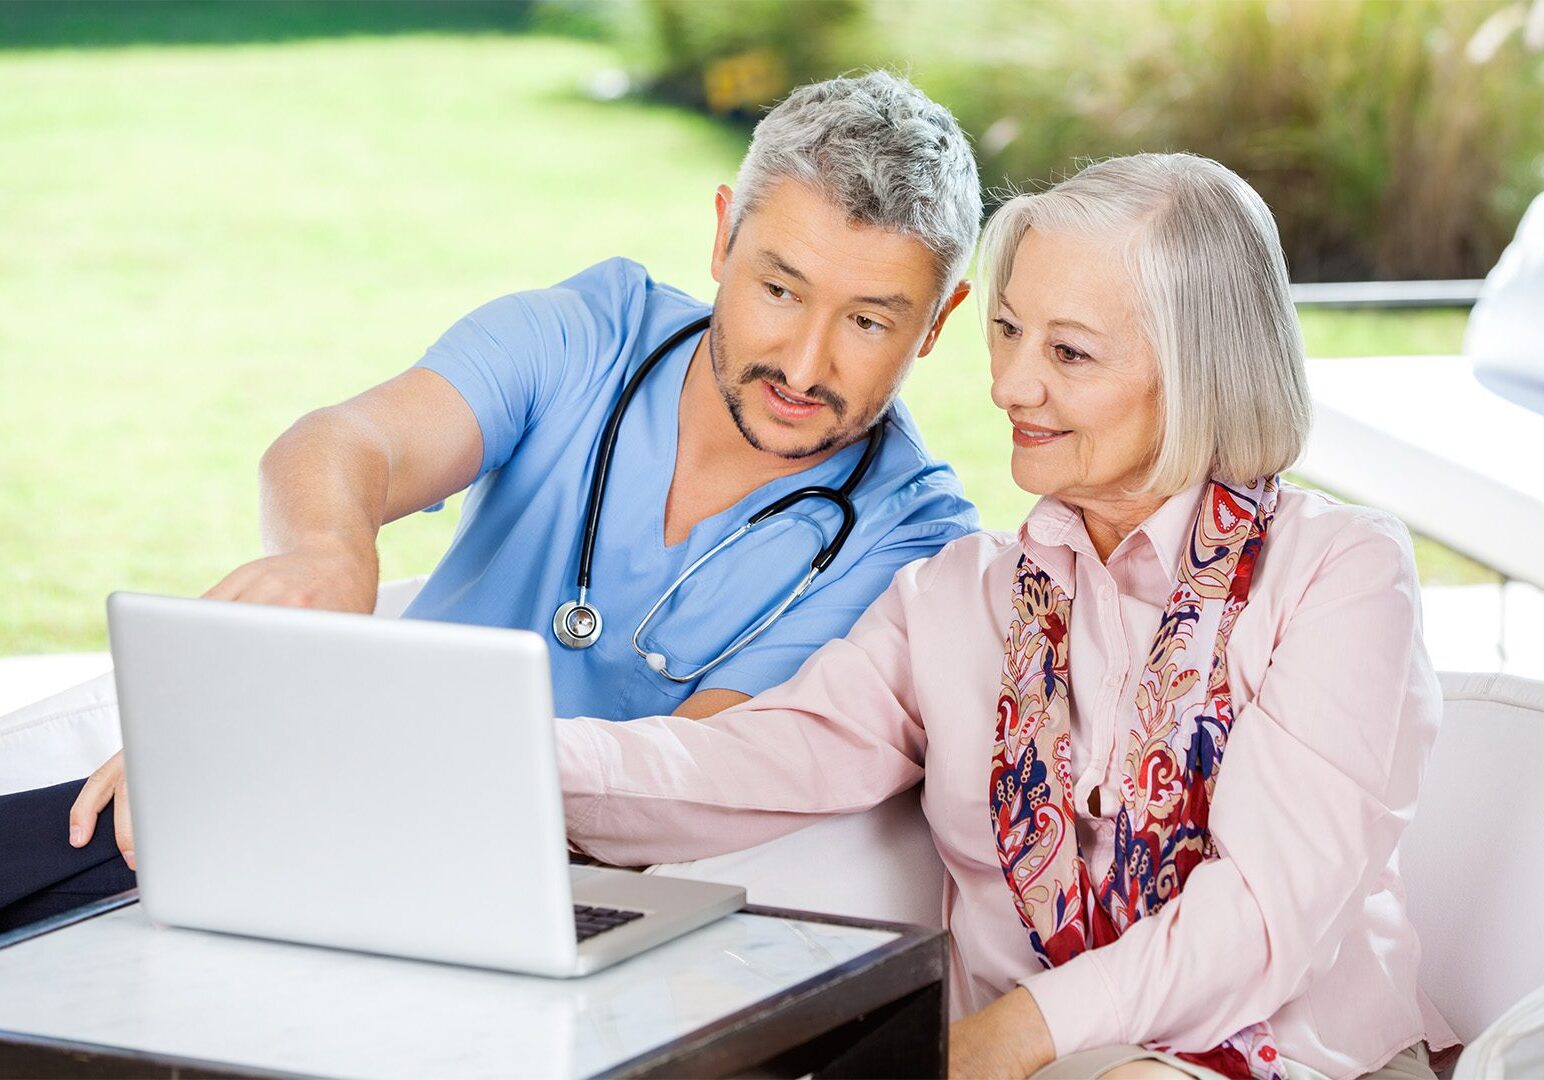 Male caretaker assisting senior woman in using laptop at nursing home porch